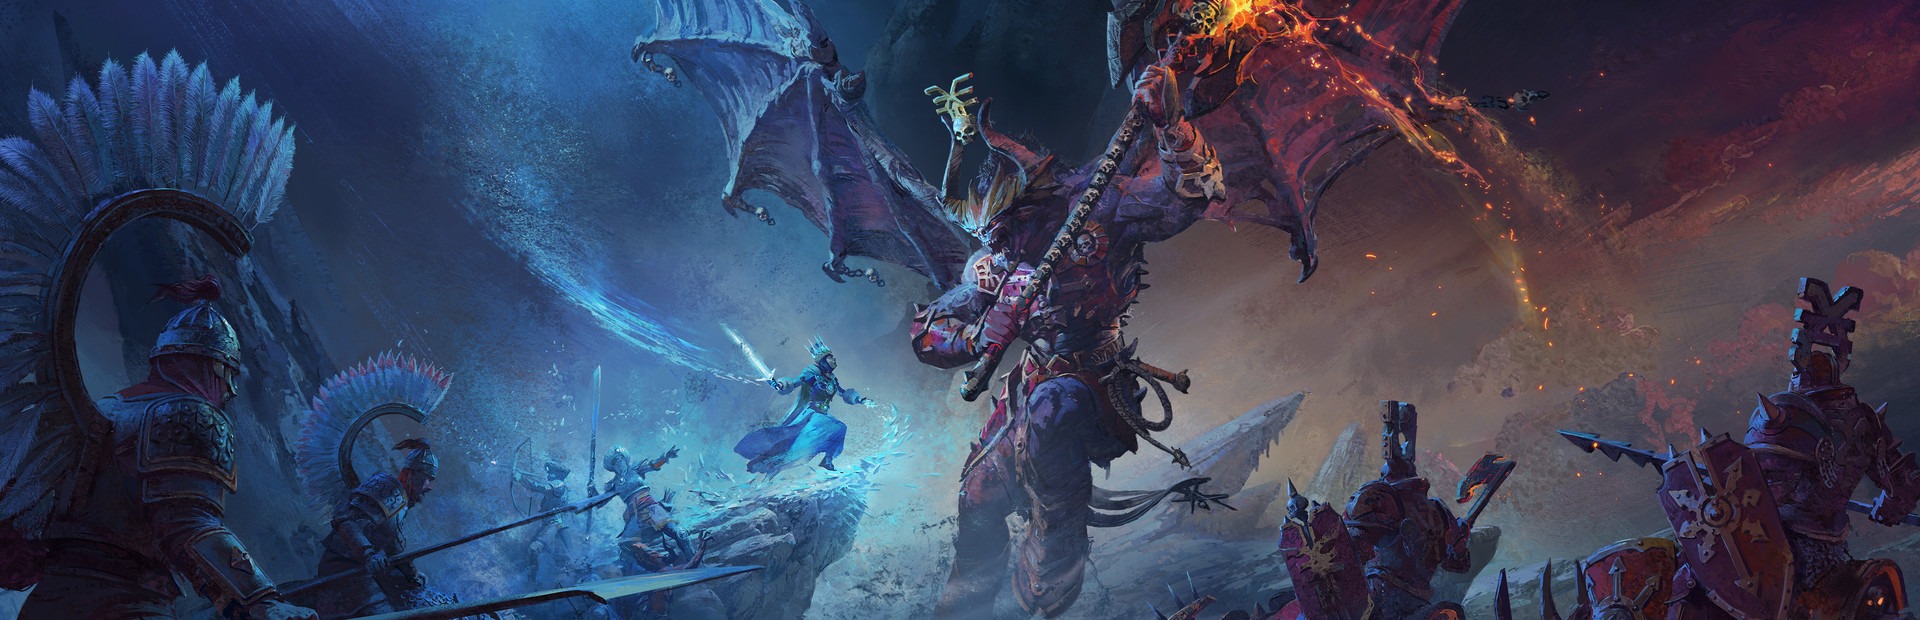 Total War: Warhammer 3 Feature Image